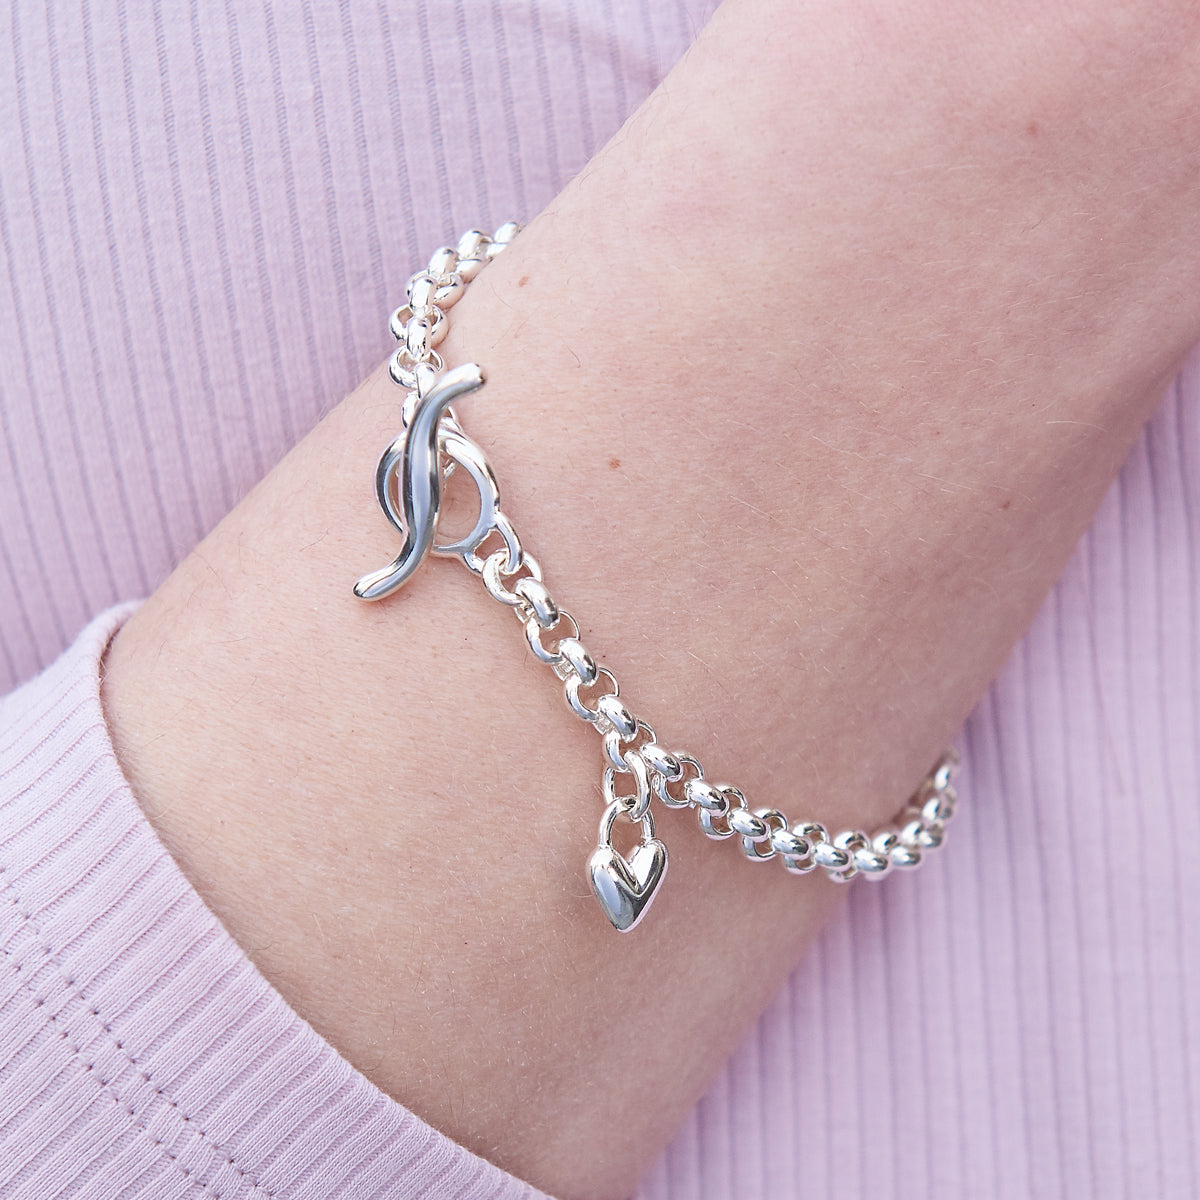 Vintage style belcher chain silver charm bracelet with a heart charm made in UK Scarlett Jewellery